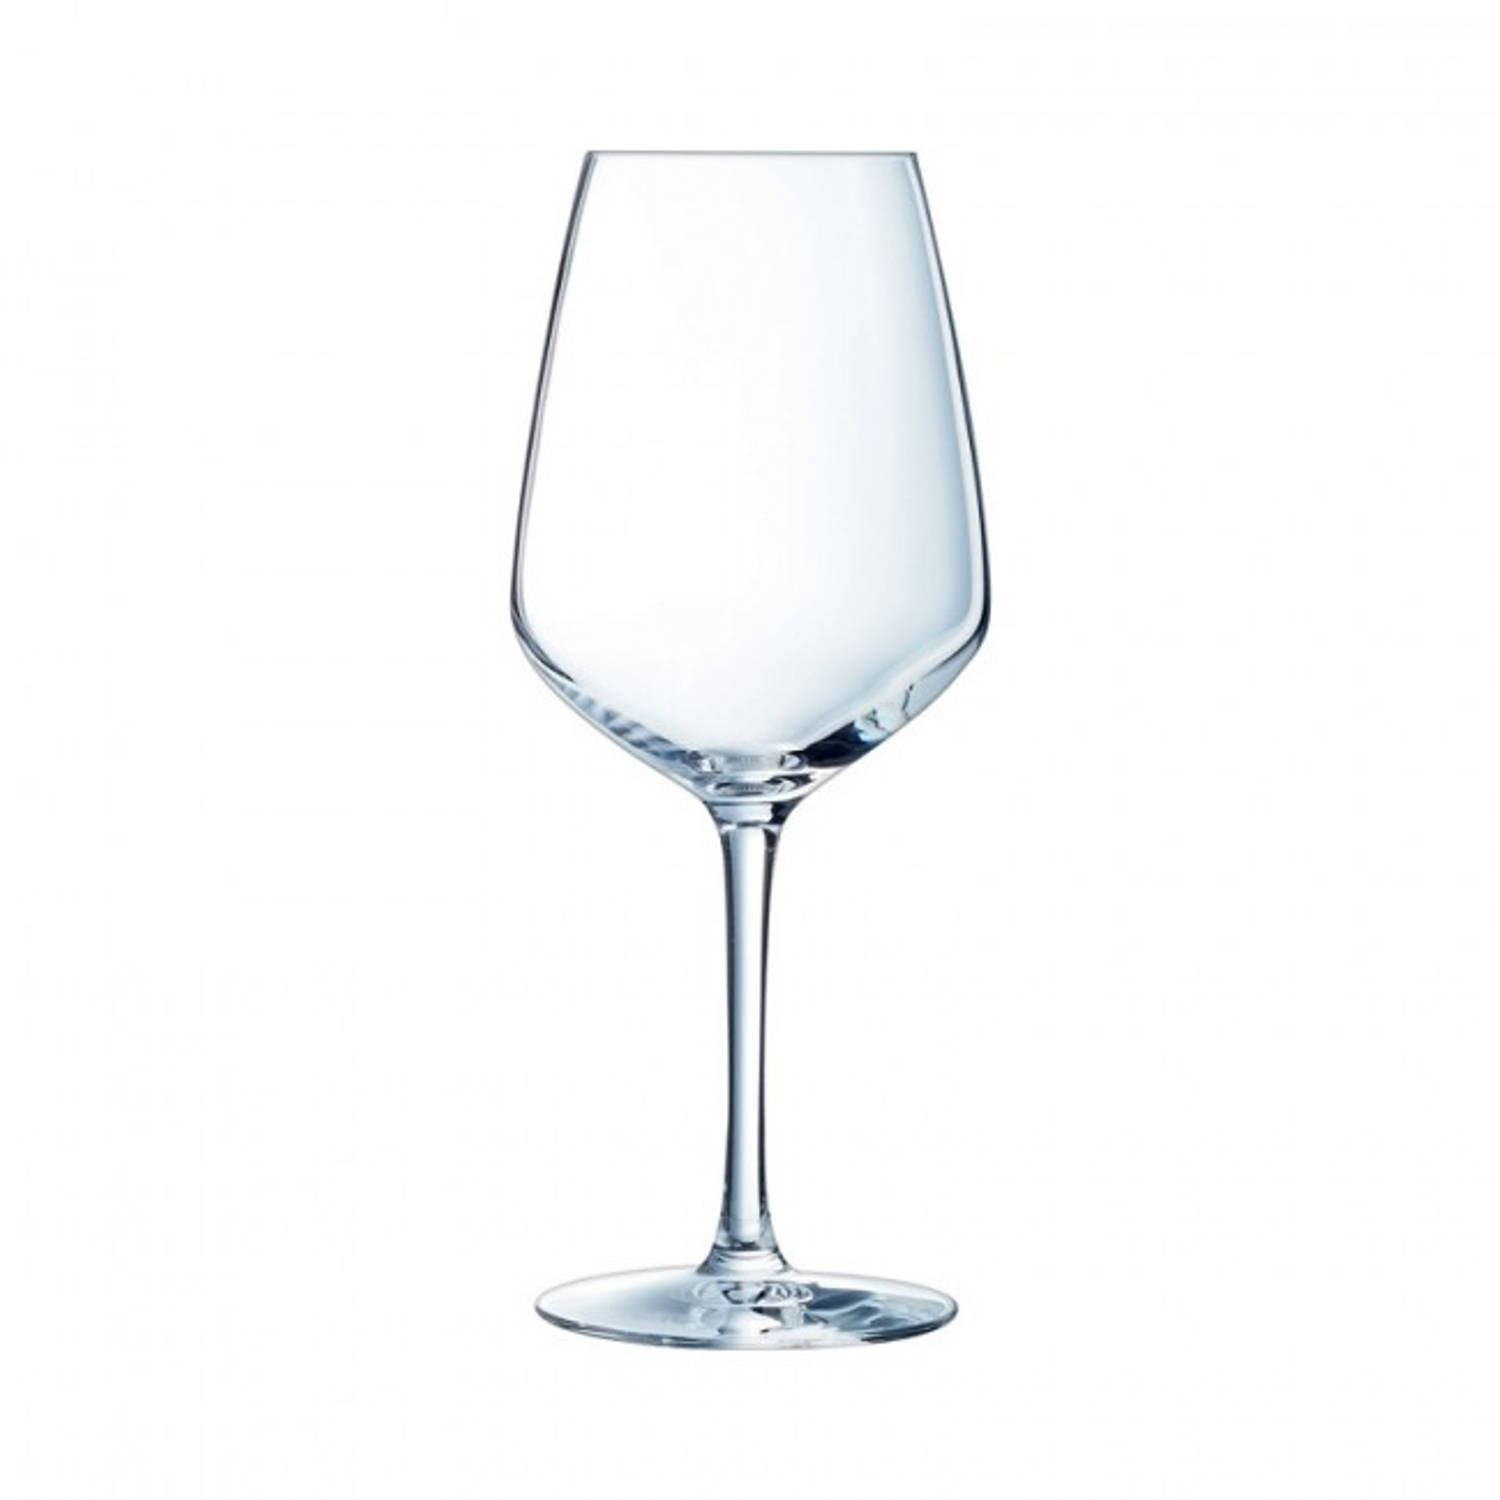 Luminarc Vinetis rood wijnglas - 40 cl - Set-6